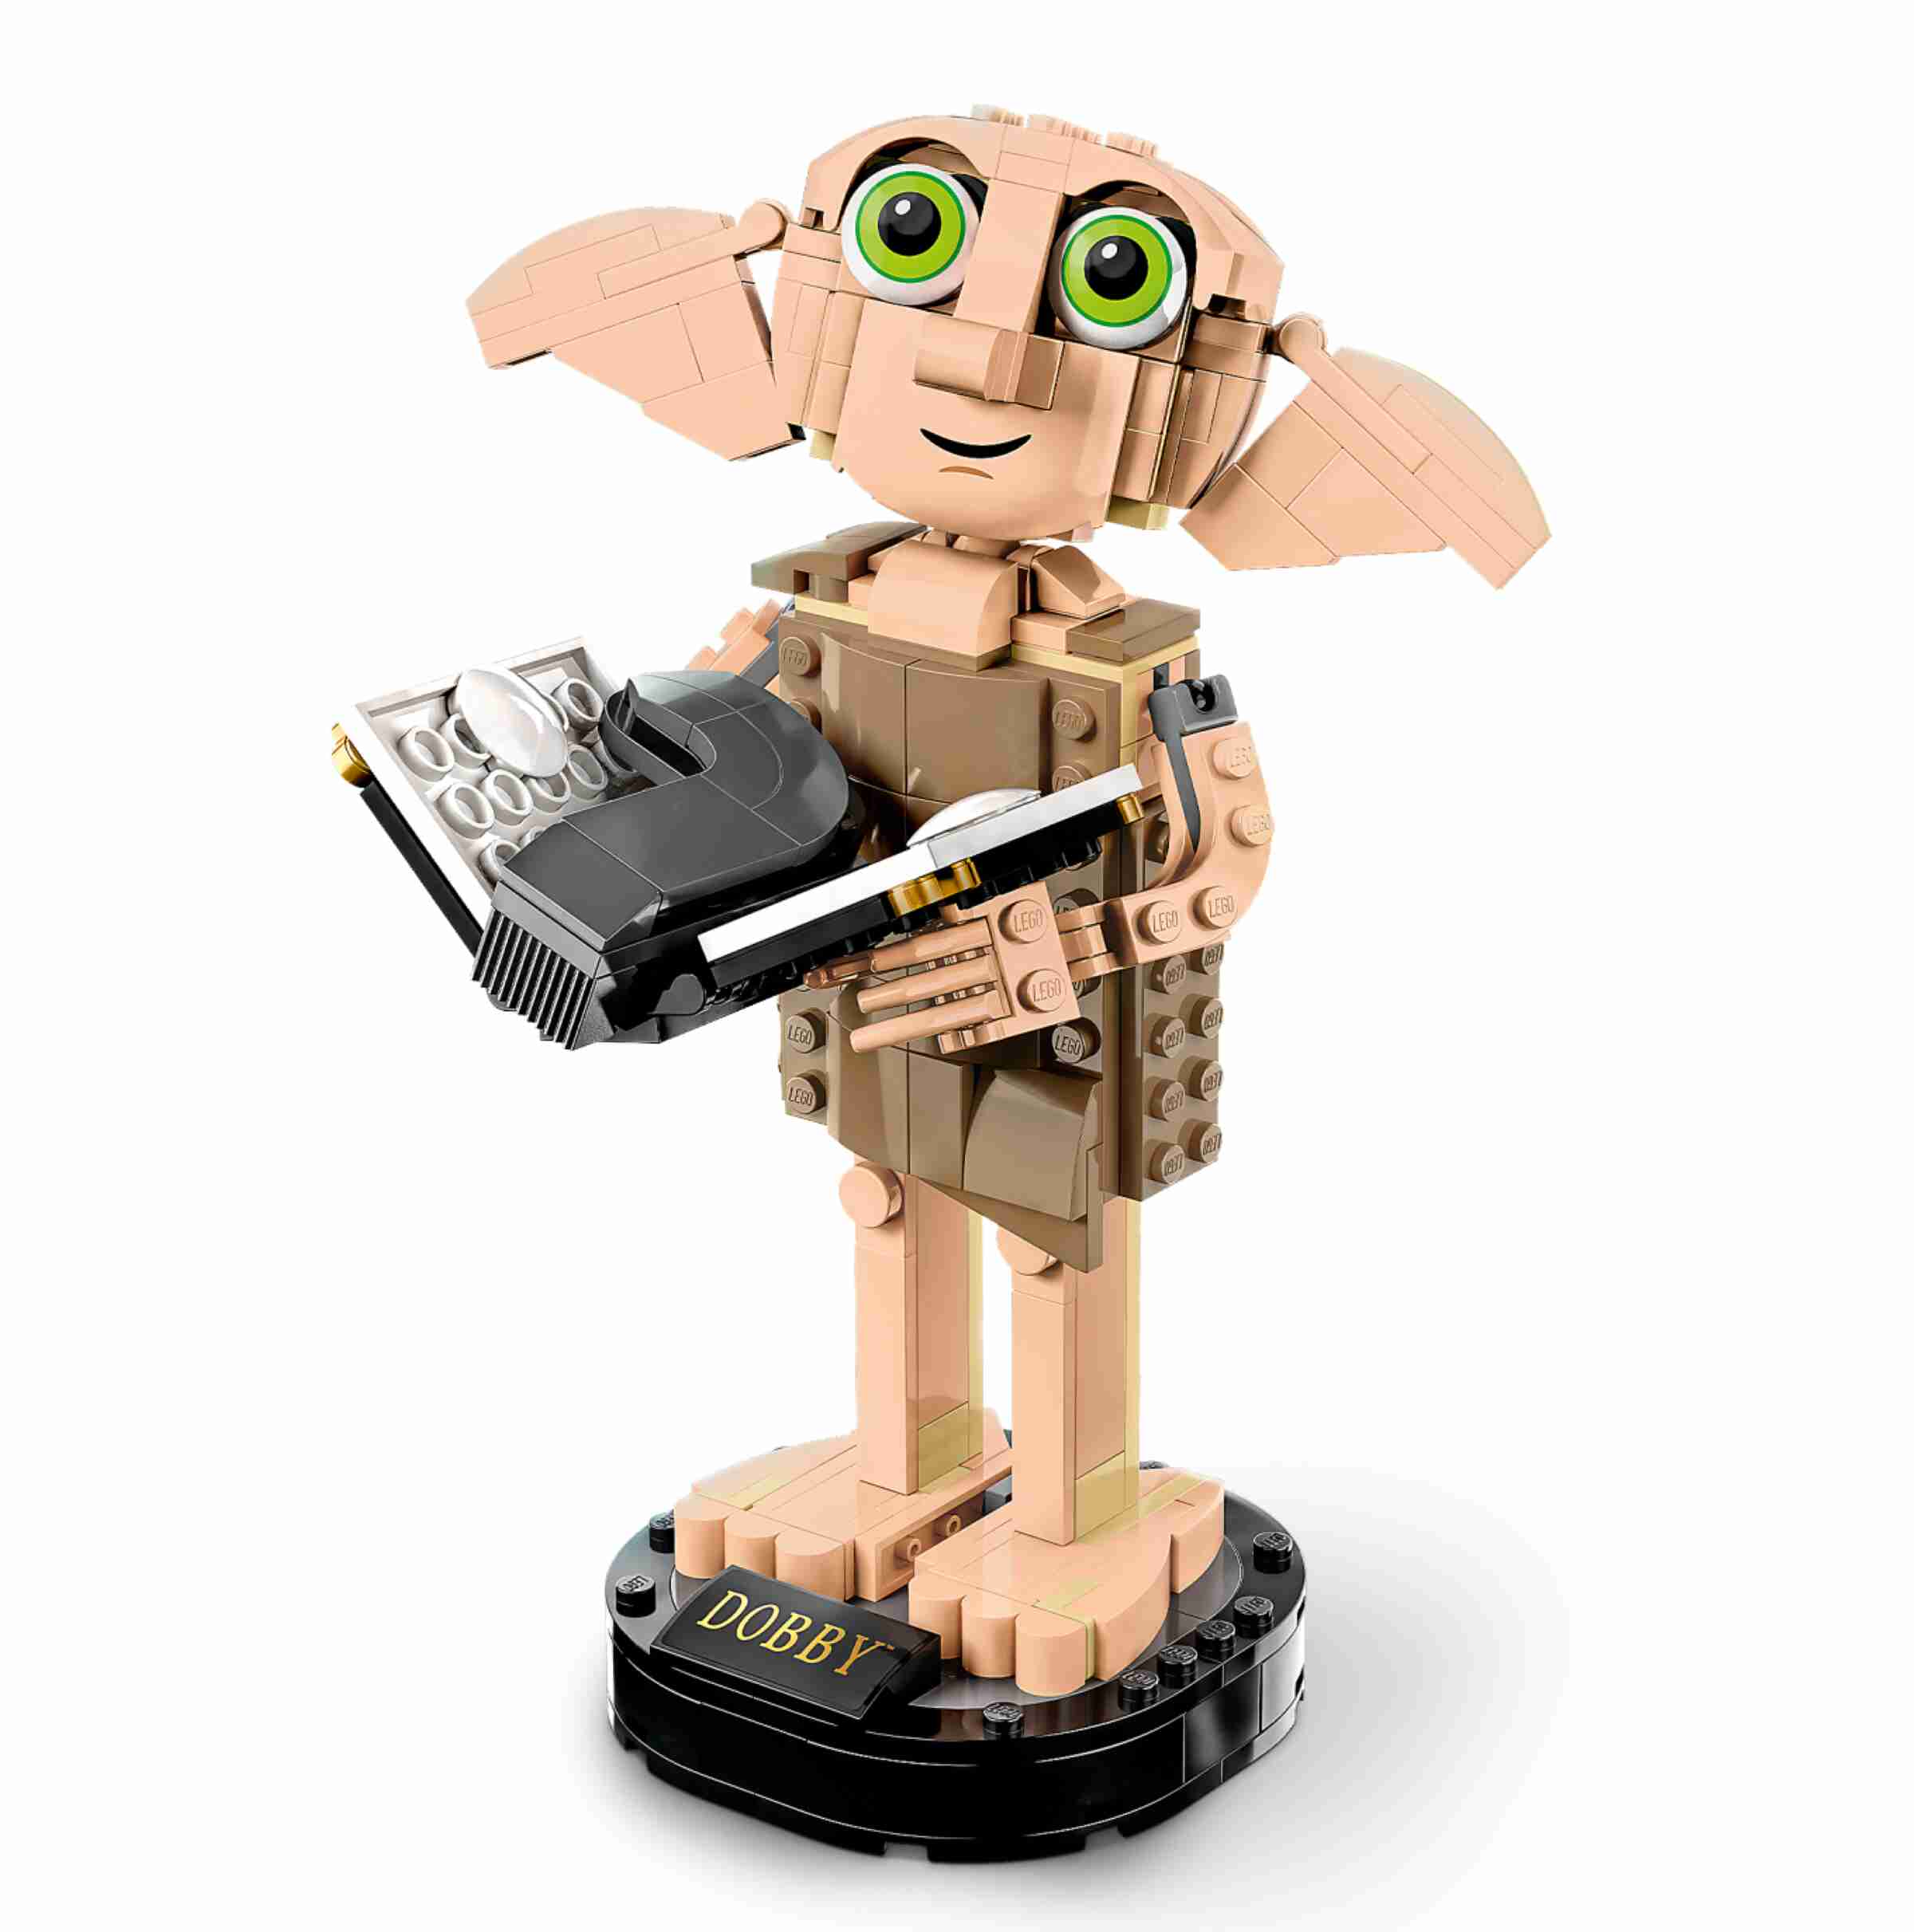 LEGO 76421 Harry Potter Dobby der Hauself, Harry Potters Socke, schwebende Torte